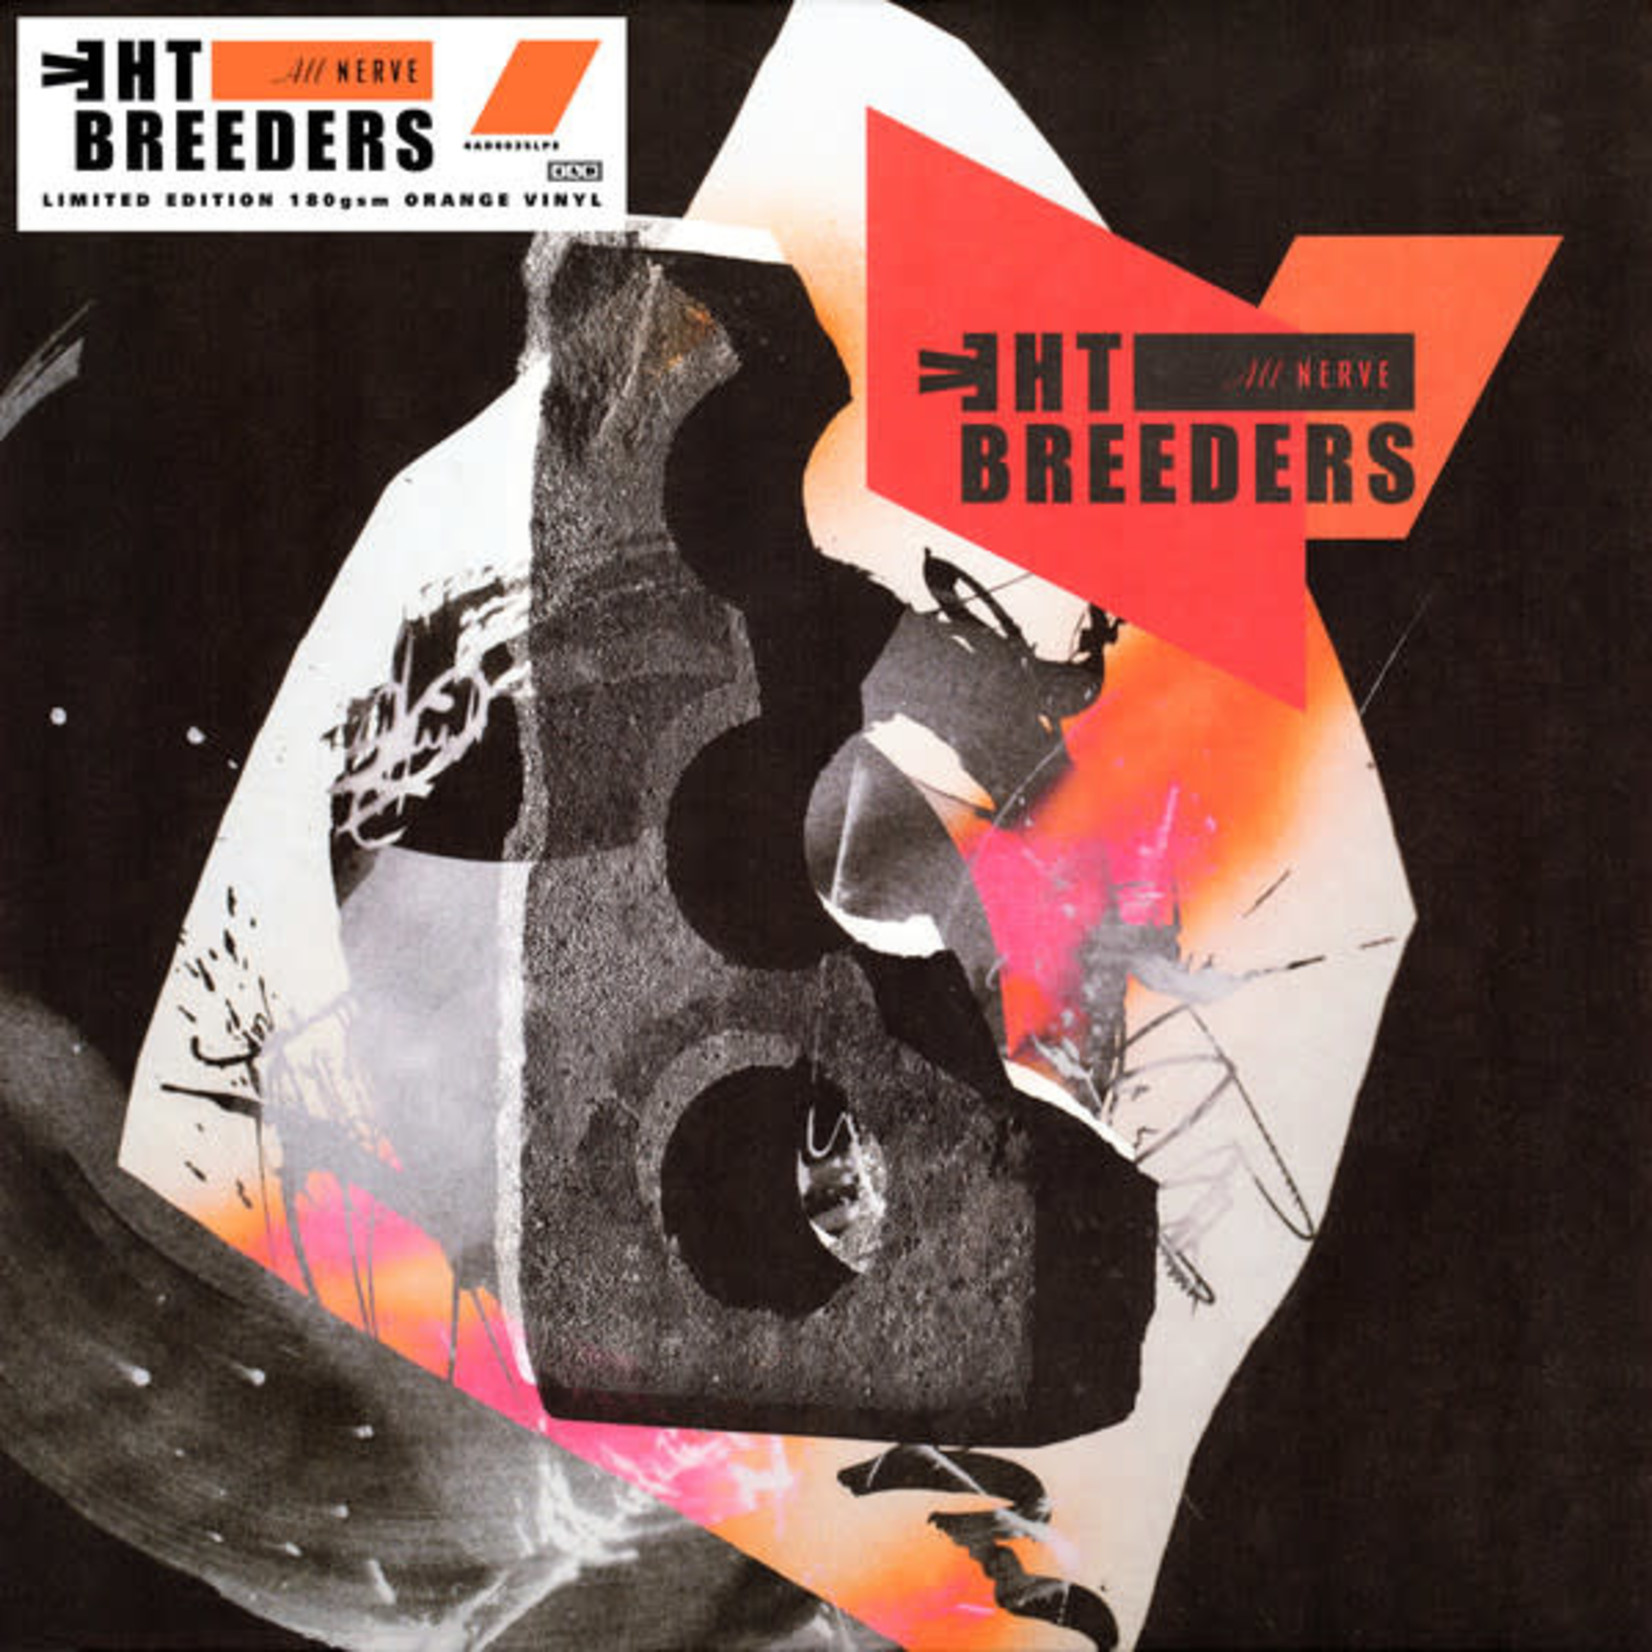 4AD Breeders - All Nerve (LP) [Orange]